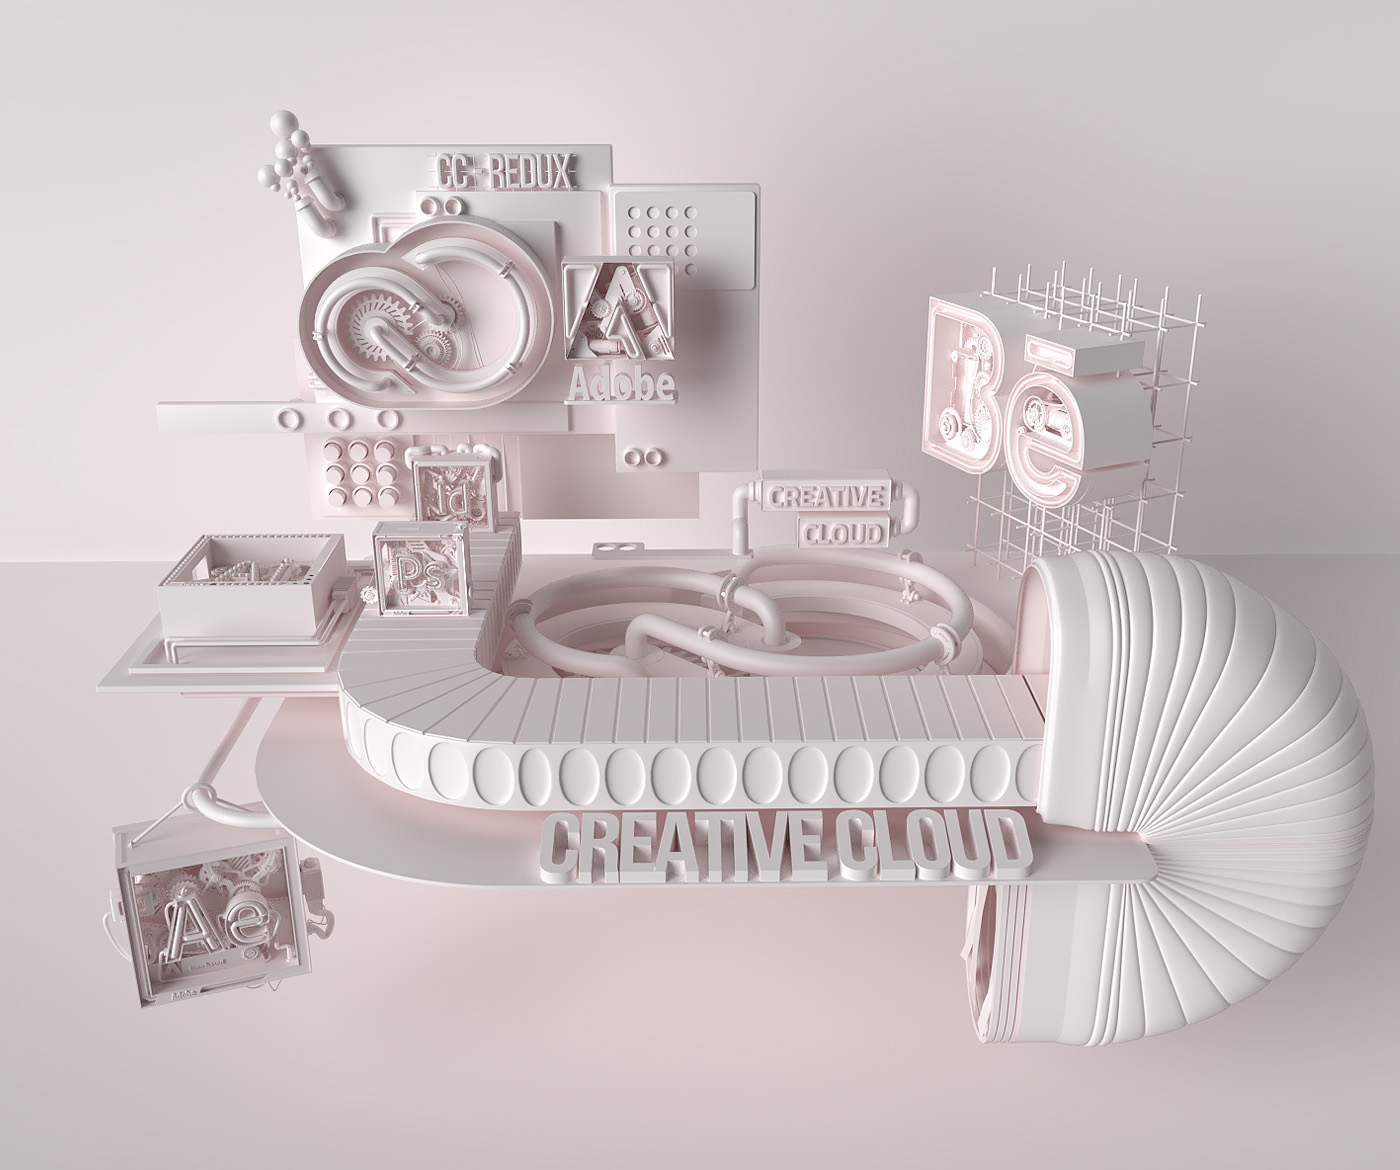 adobe Creative Cloud Illustrator 3D still life clouds pink